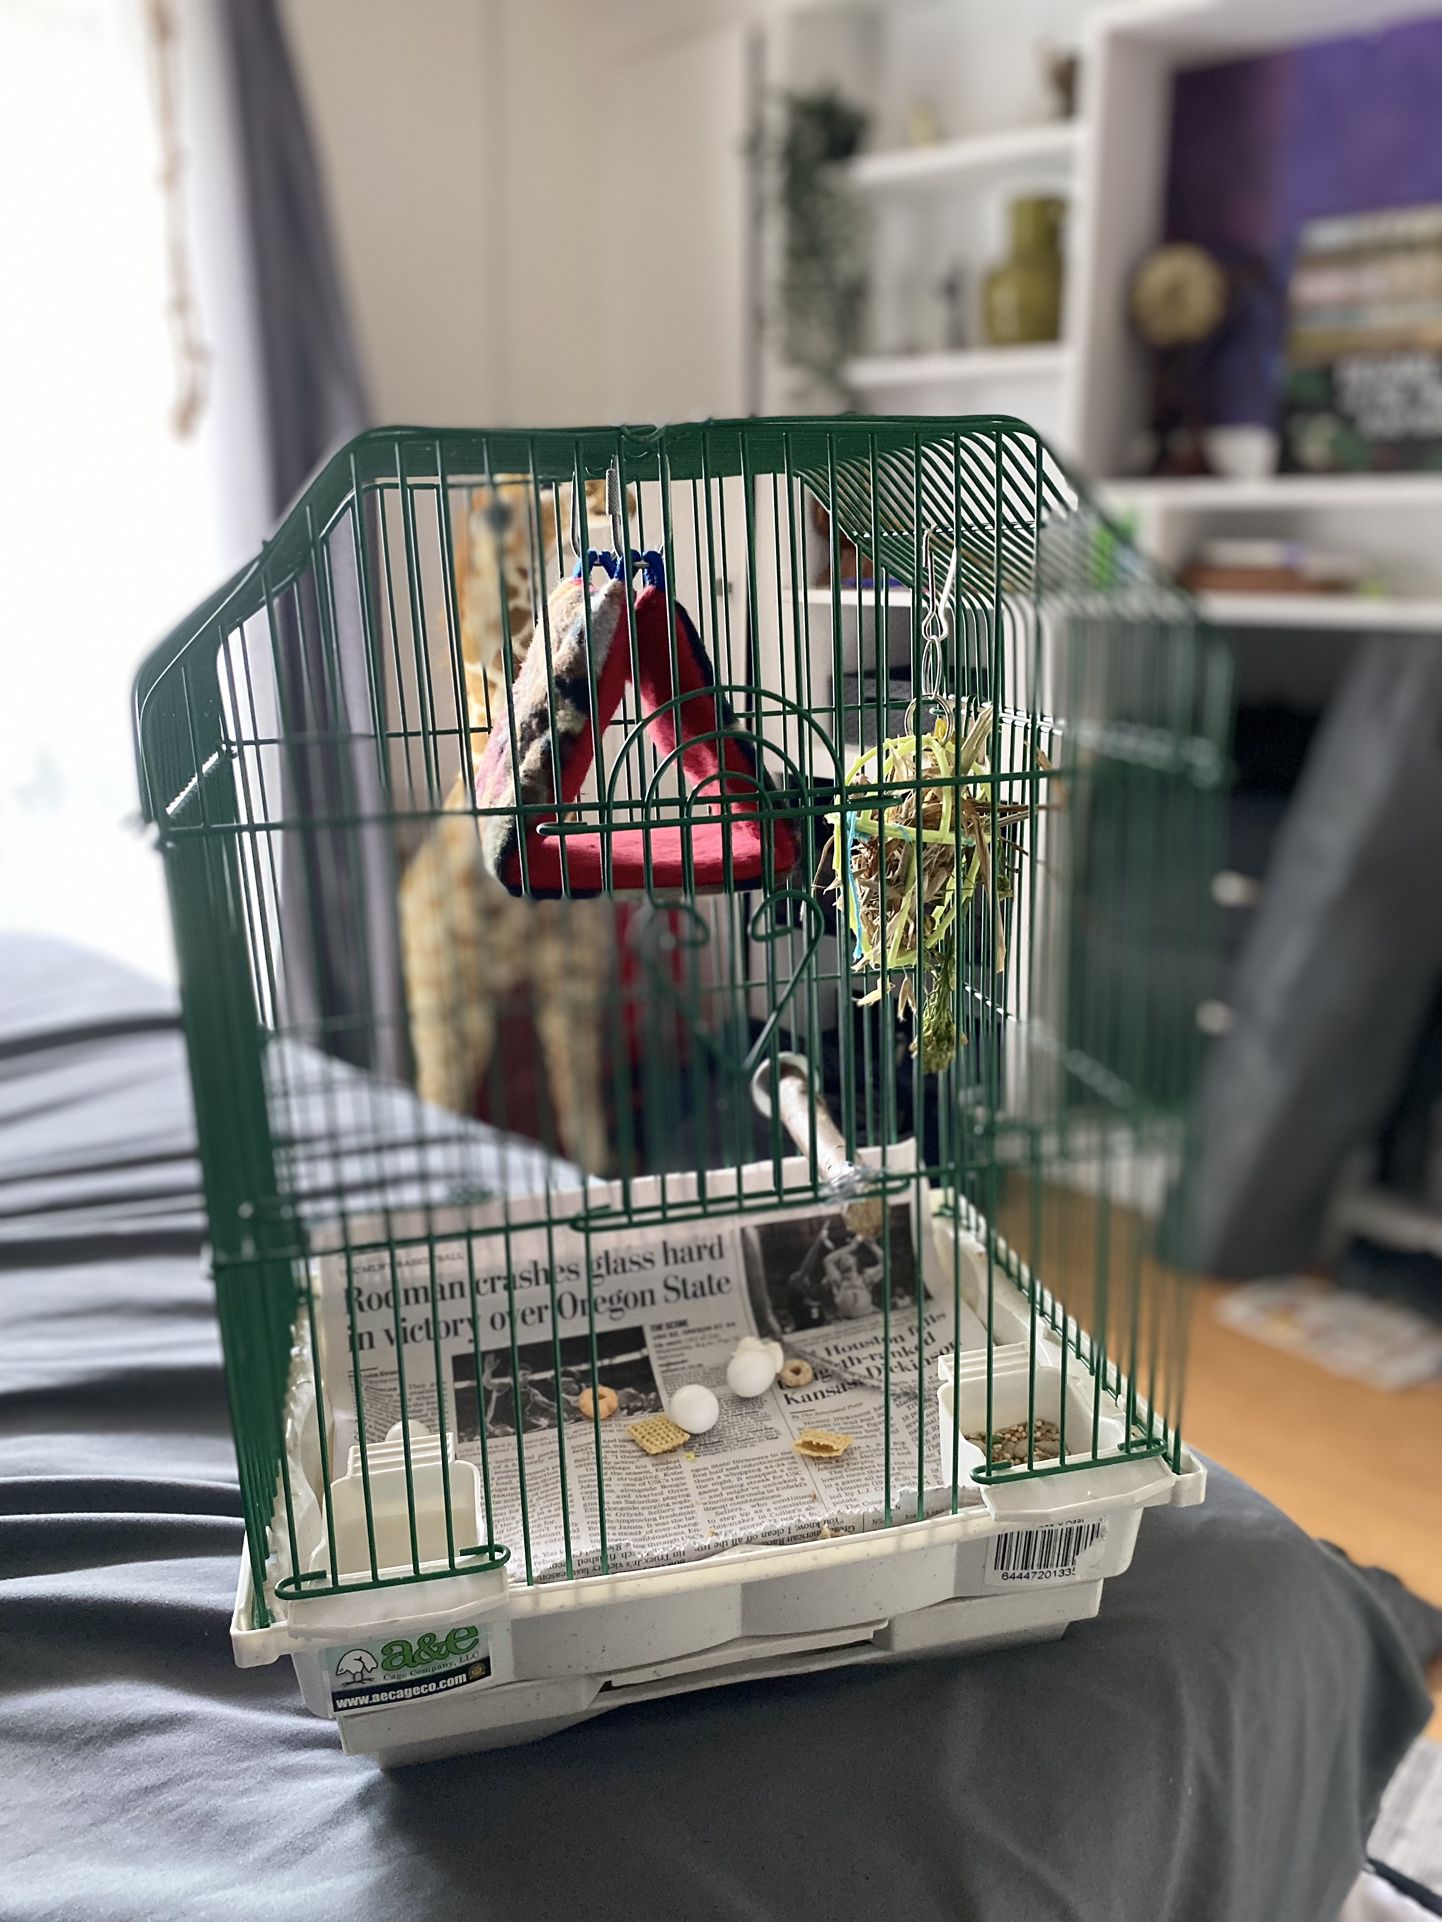 Small Bird Cage